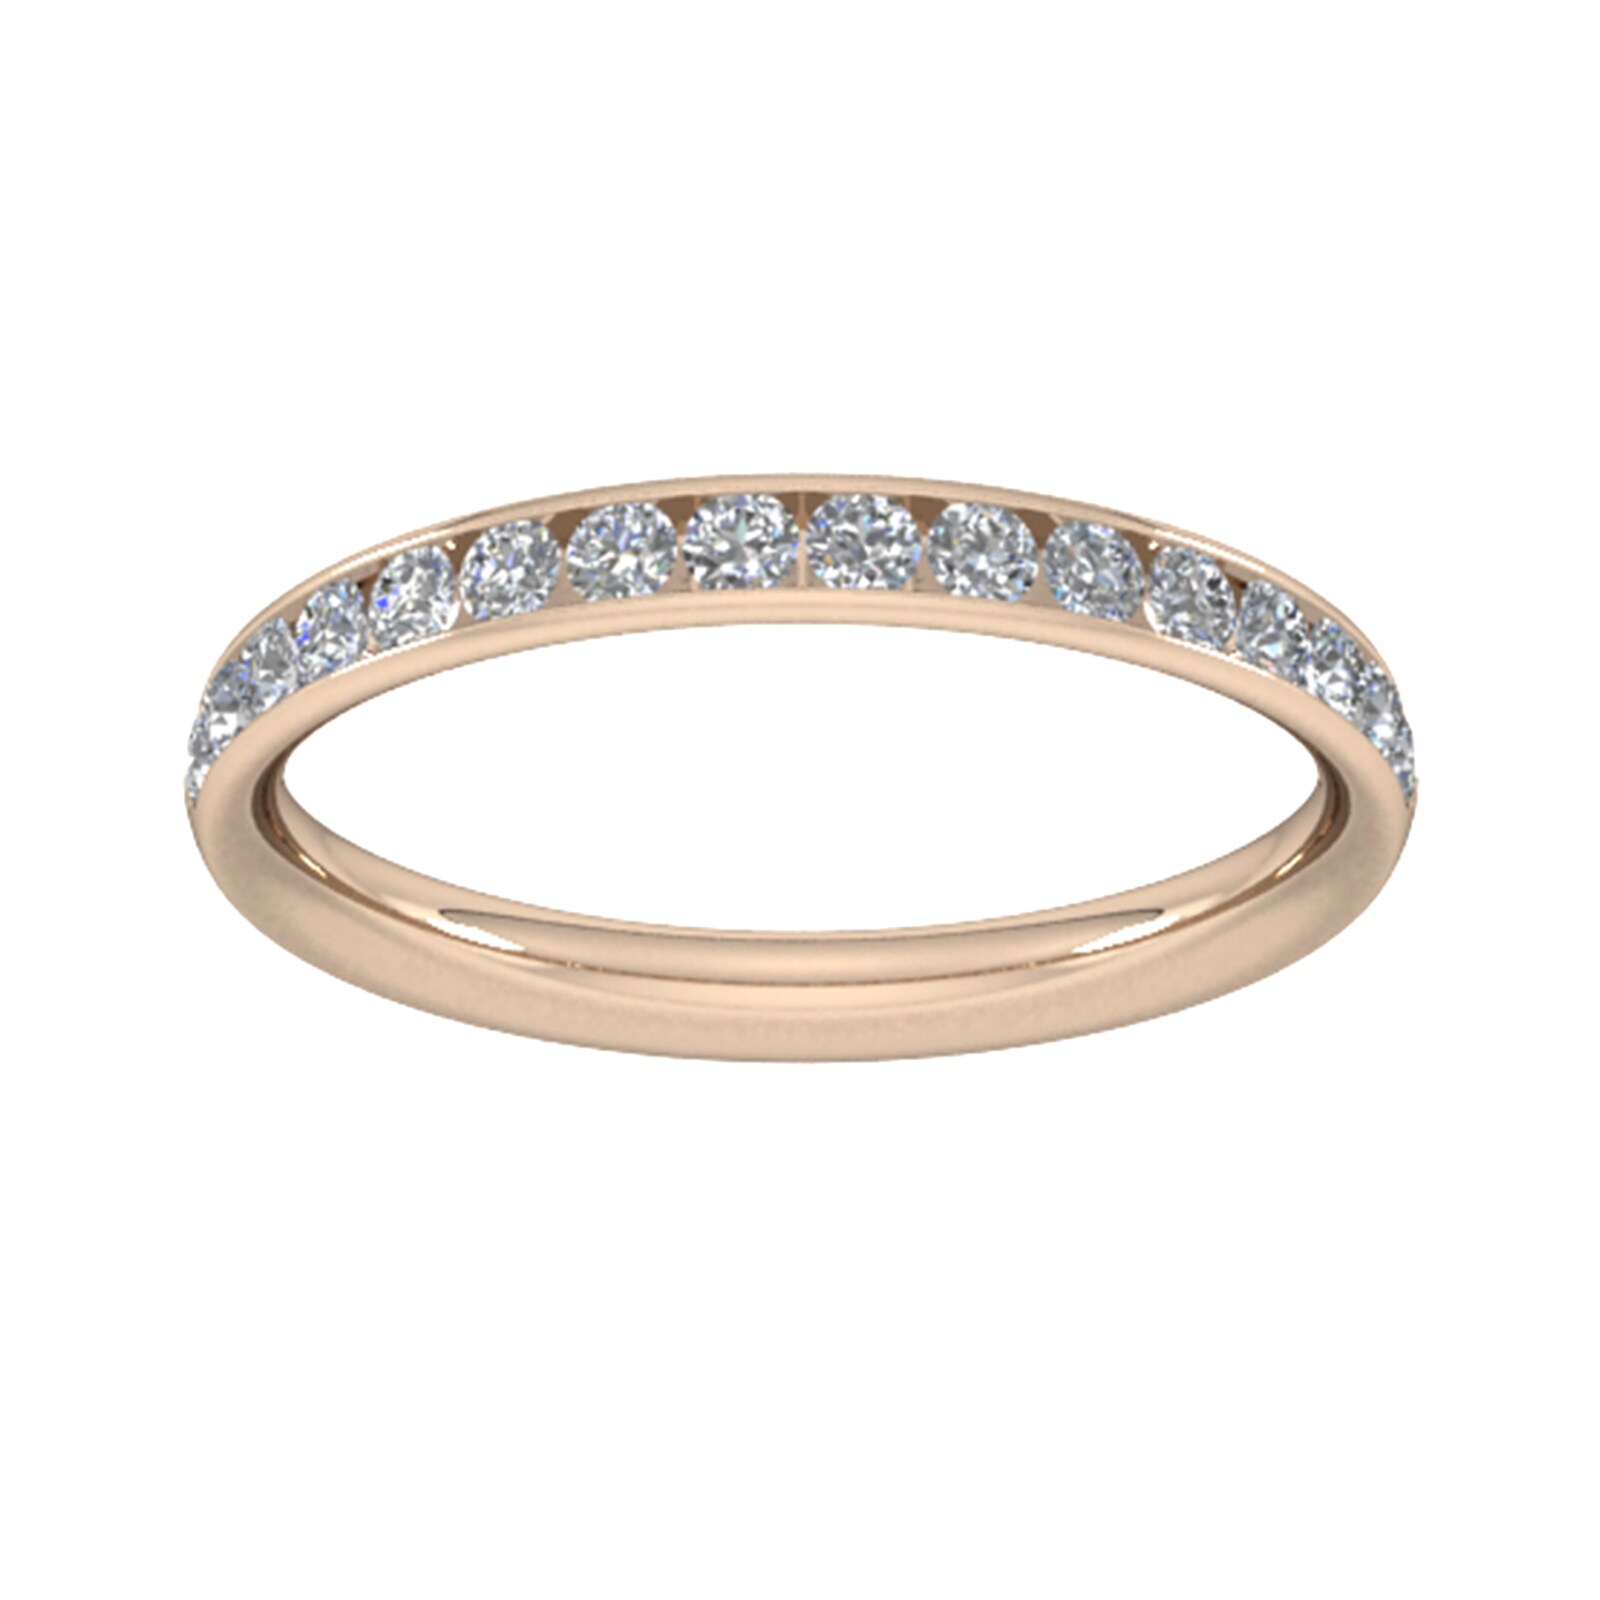 0.44 Carat Total Weight Half Channel Set Brilliant Cut Diamond Wedding Ring In 9 Carat Rose Gold - Ring Size U